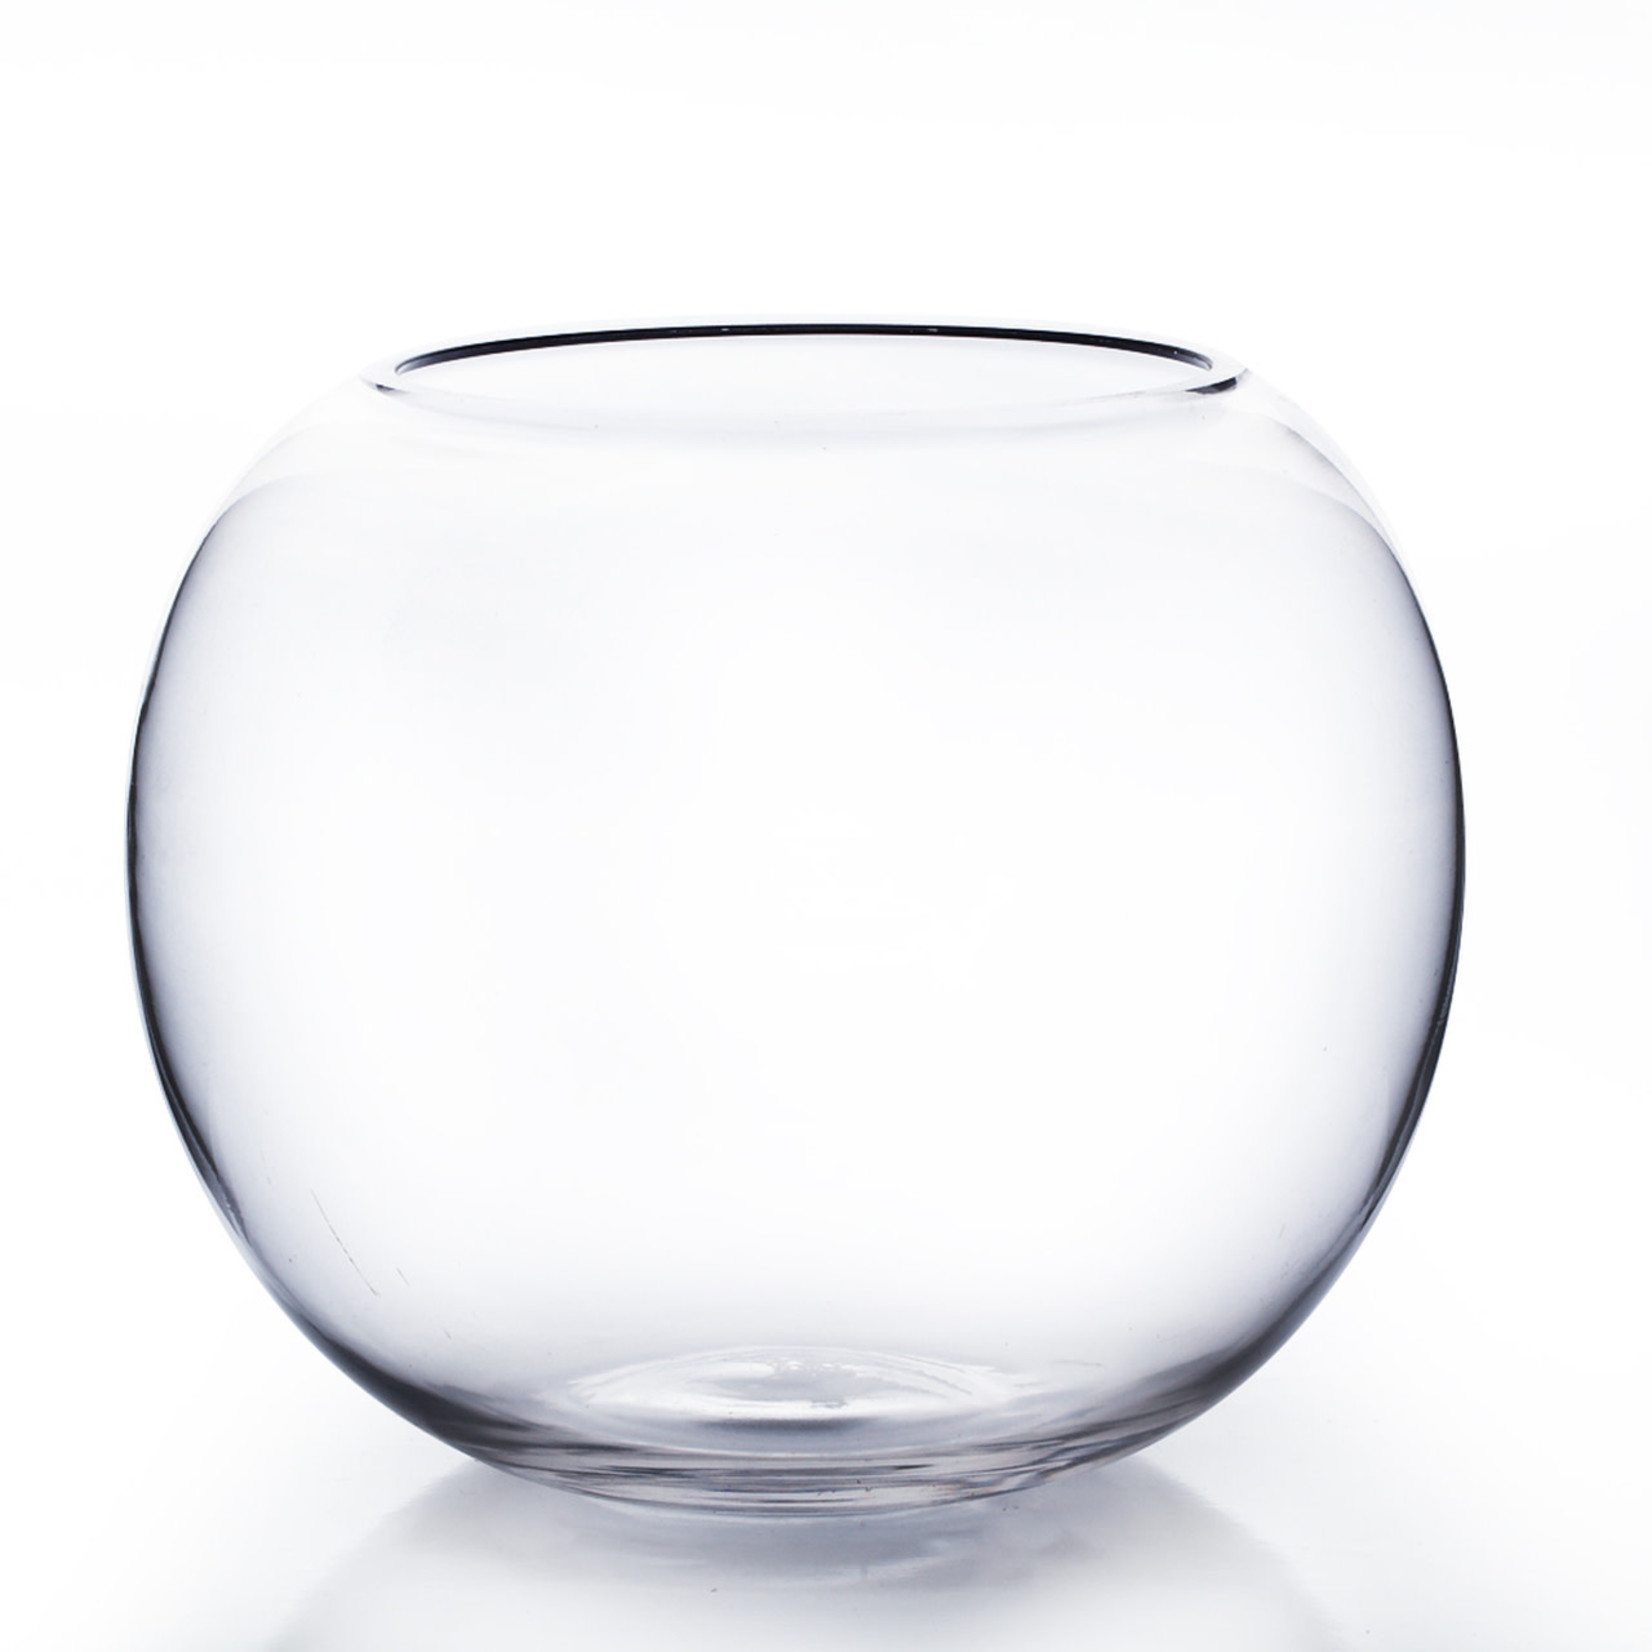 10"d x 8"h x 6.5" open CLEAR GLASS BUBBLE/FISH BOWL